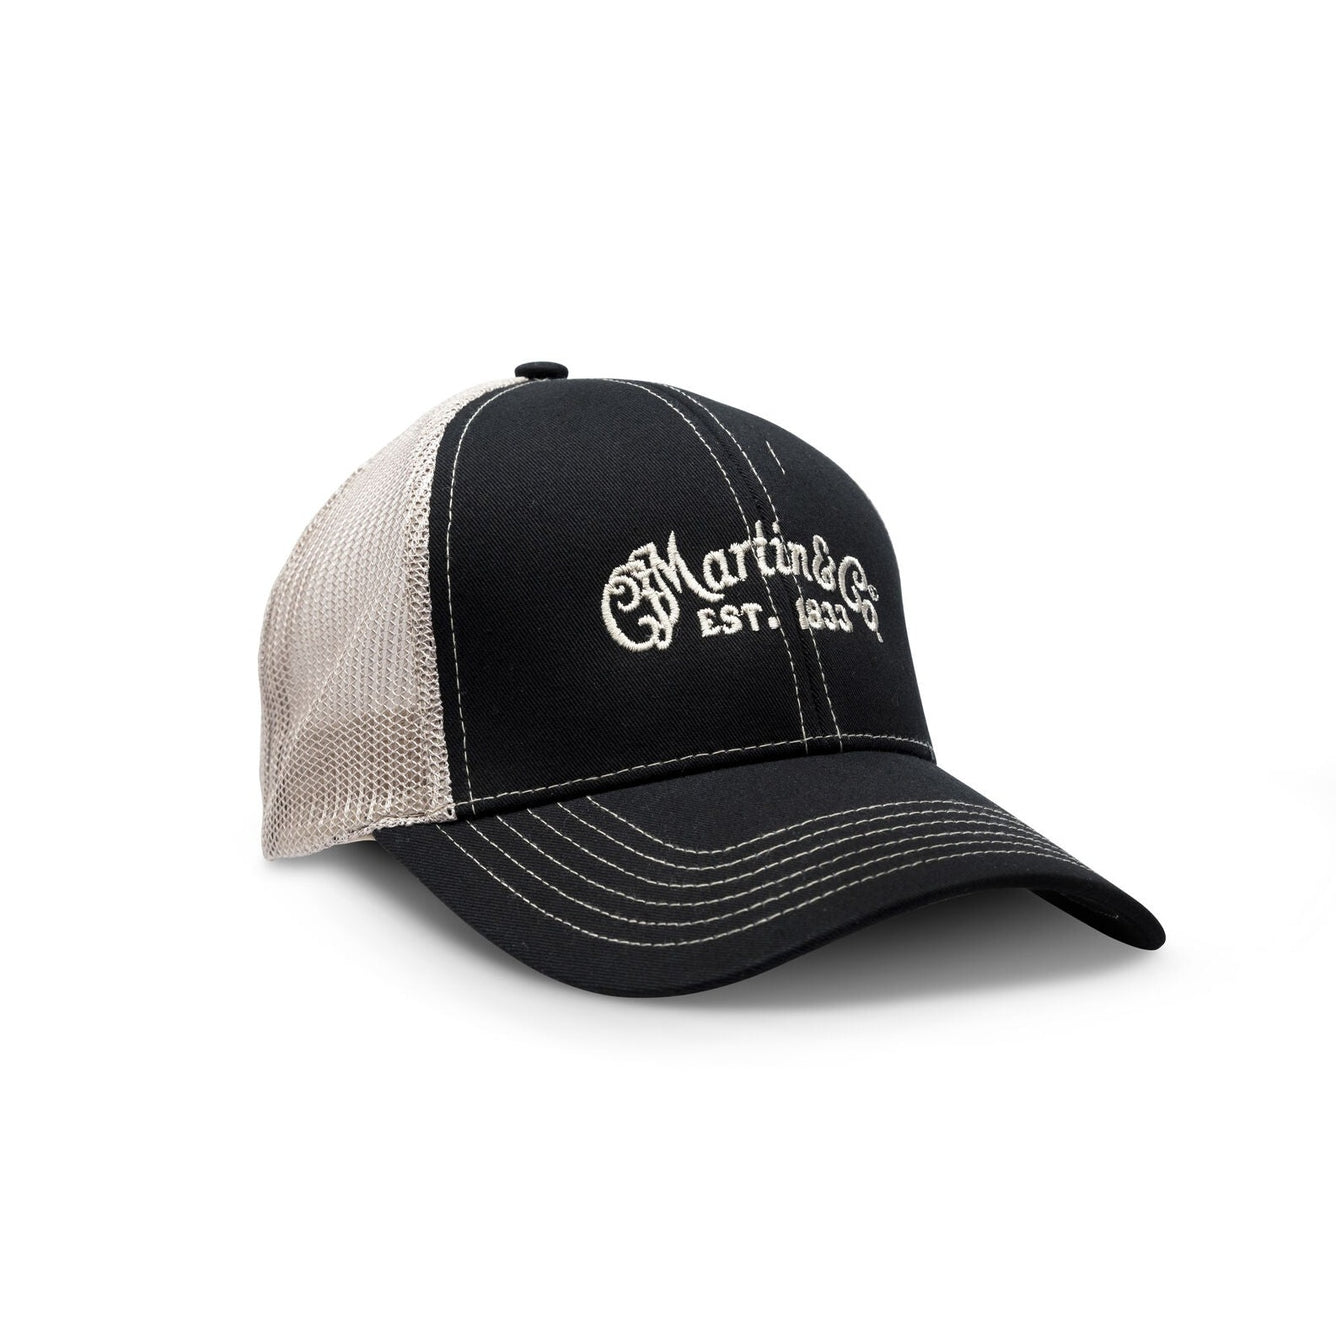 Martin CFM Logo Mesh Trucker Hat - Black/Tan